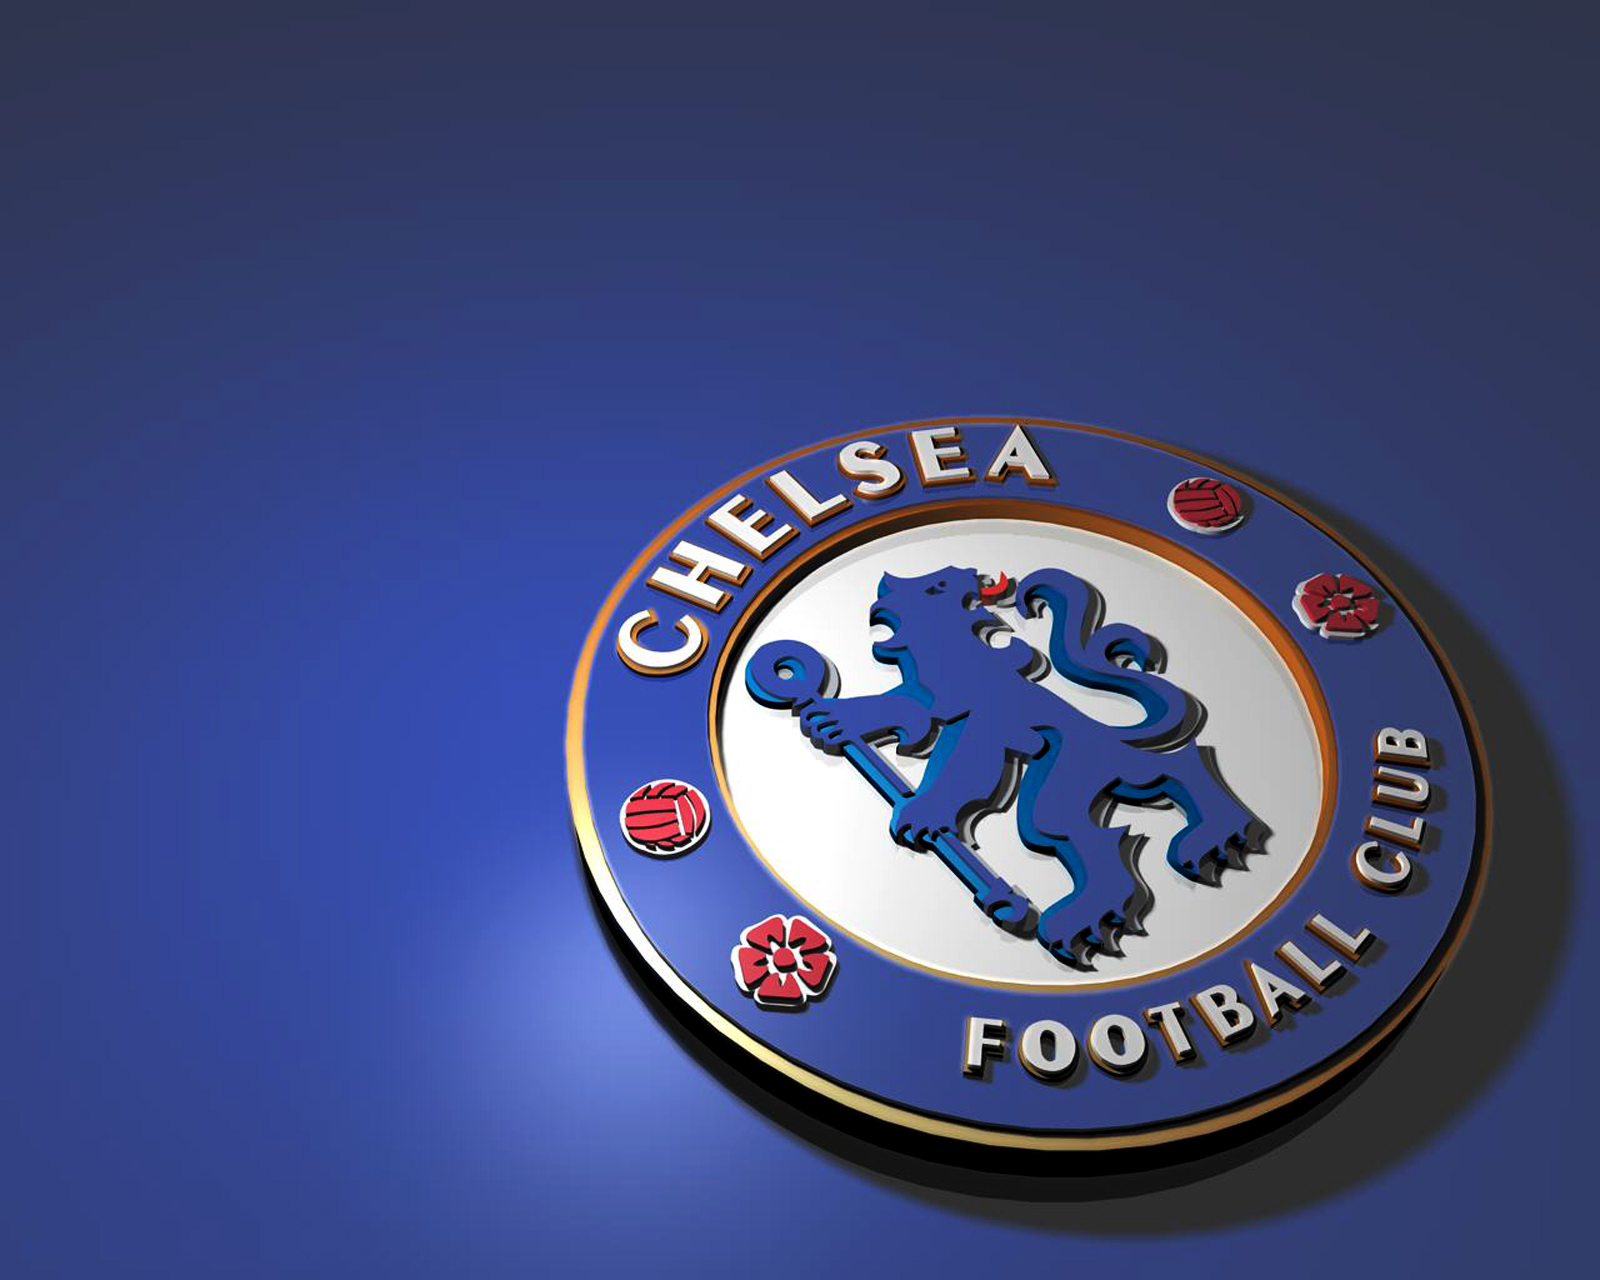 Chelsea Football Club Logo HD Wallpaper For Windows